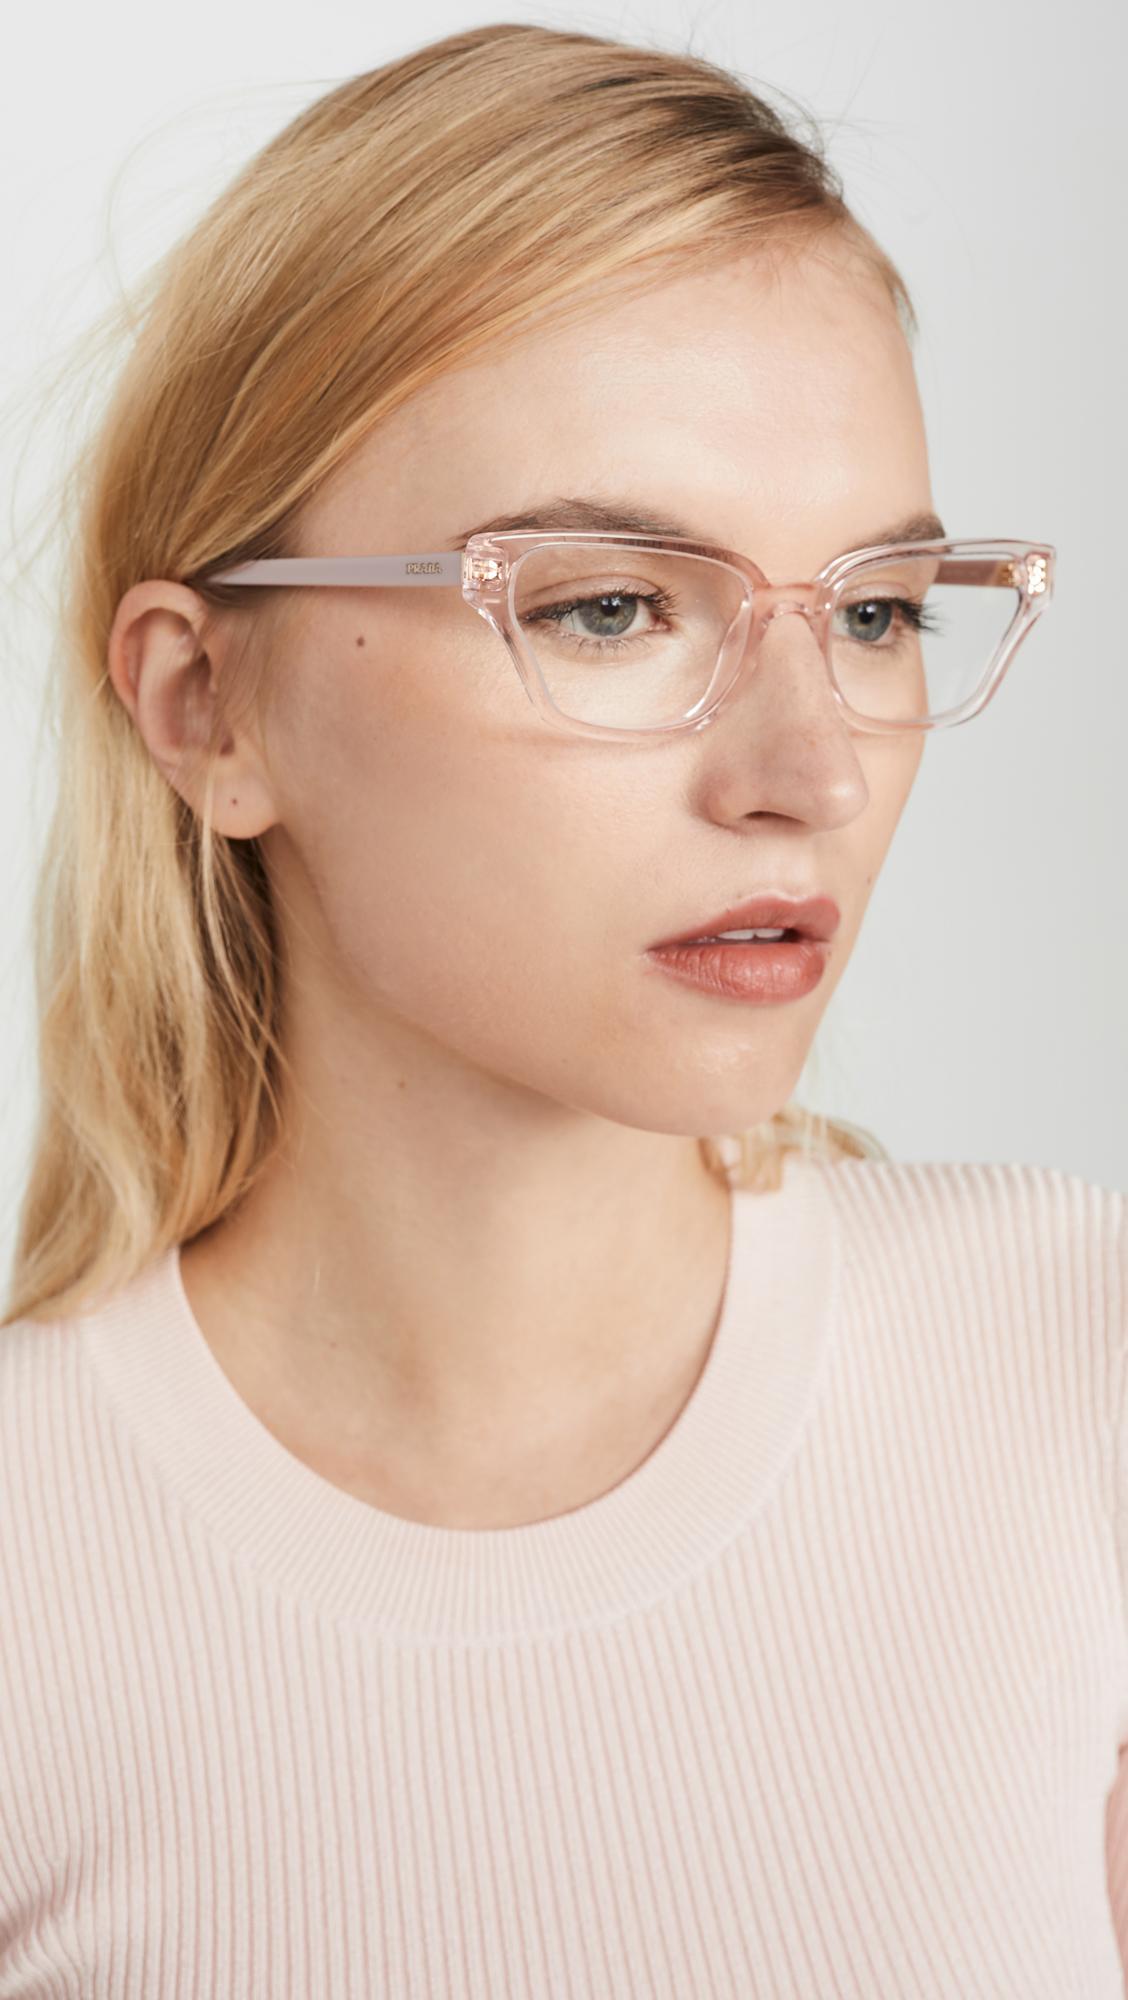 Prada Narrow Cat Eye Glasses | Lyst